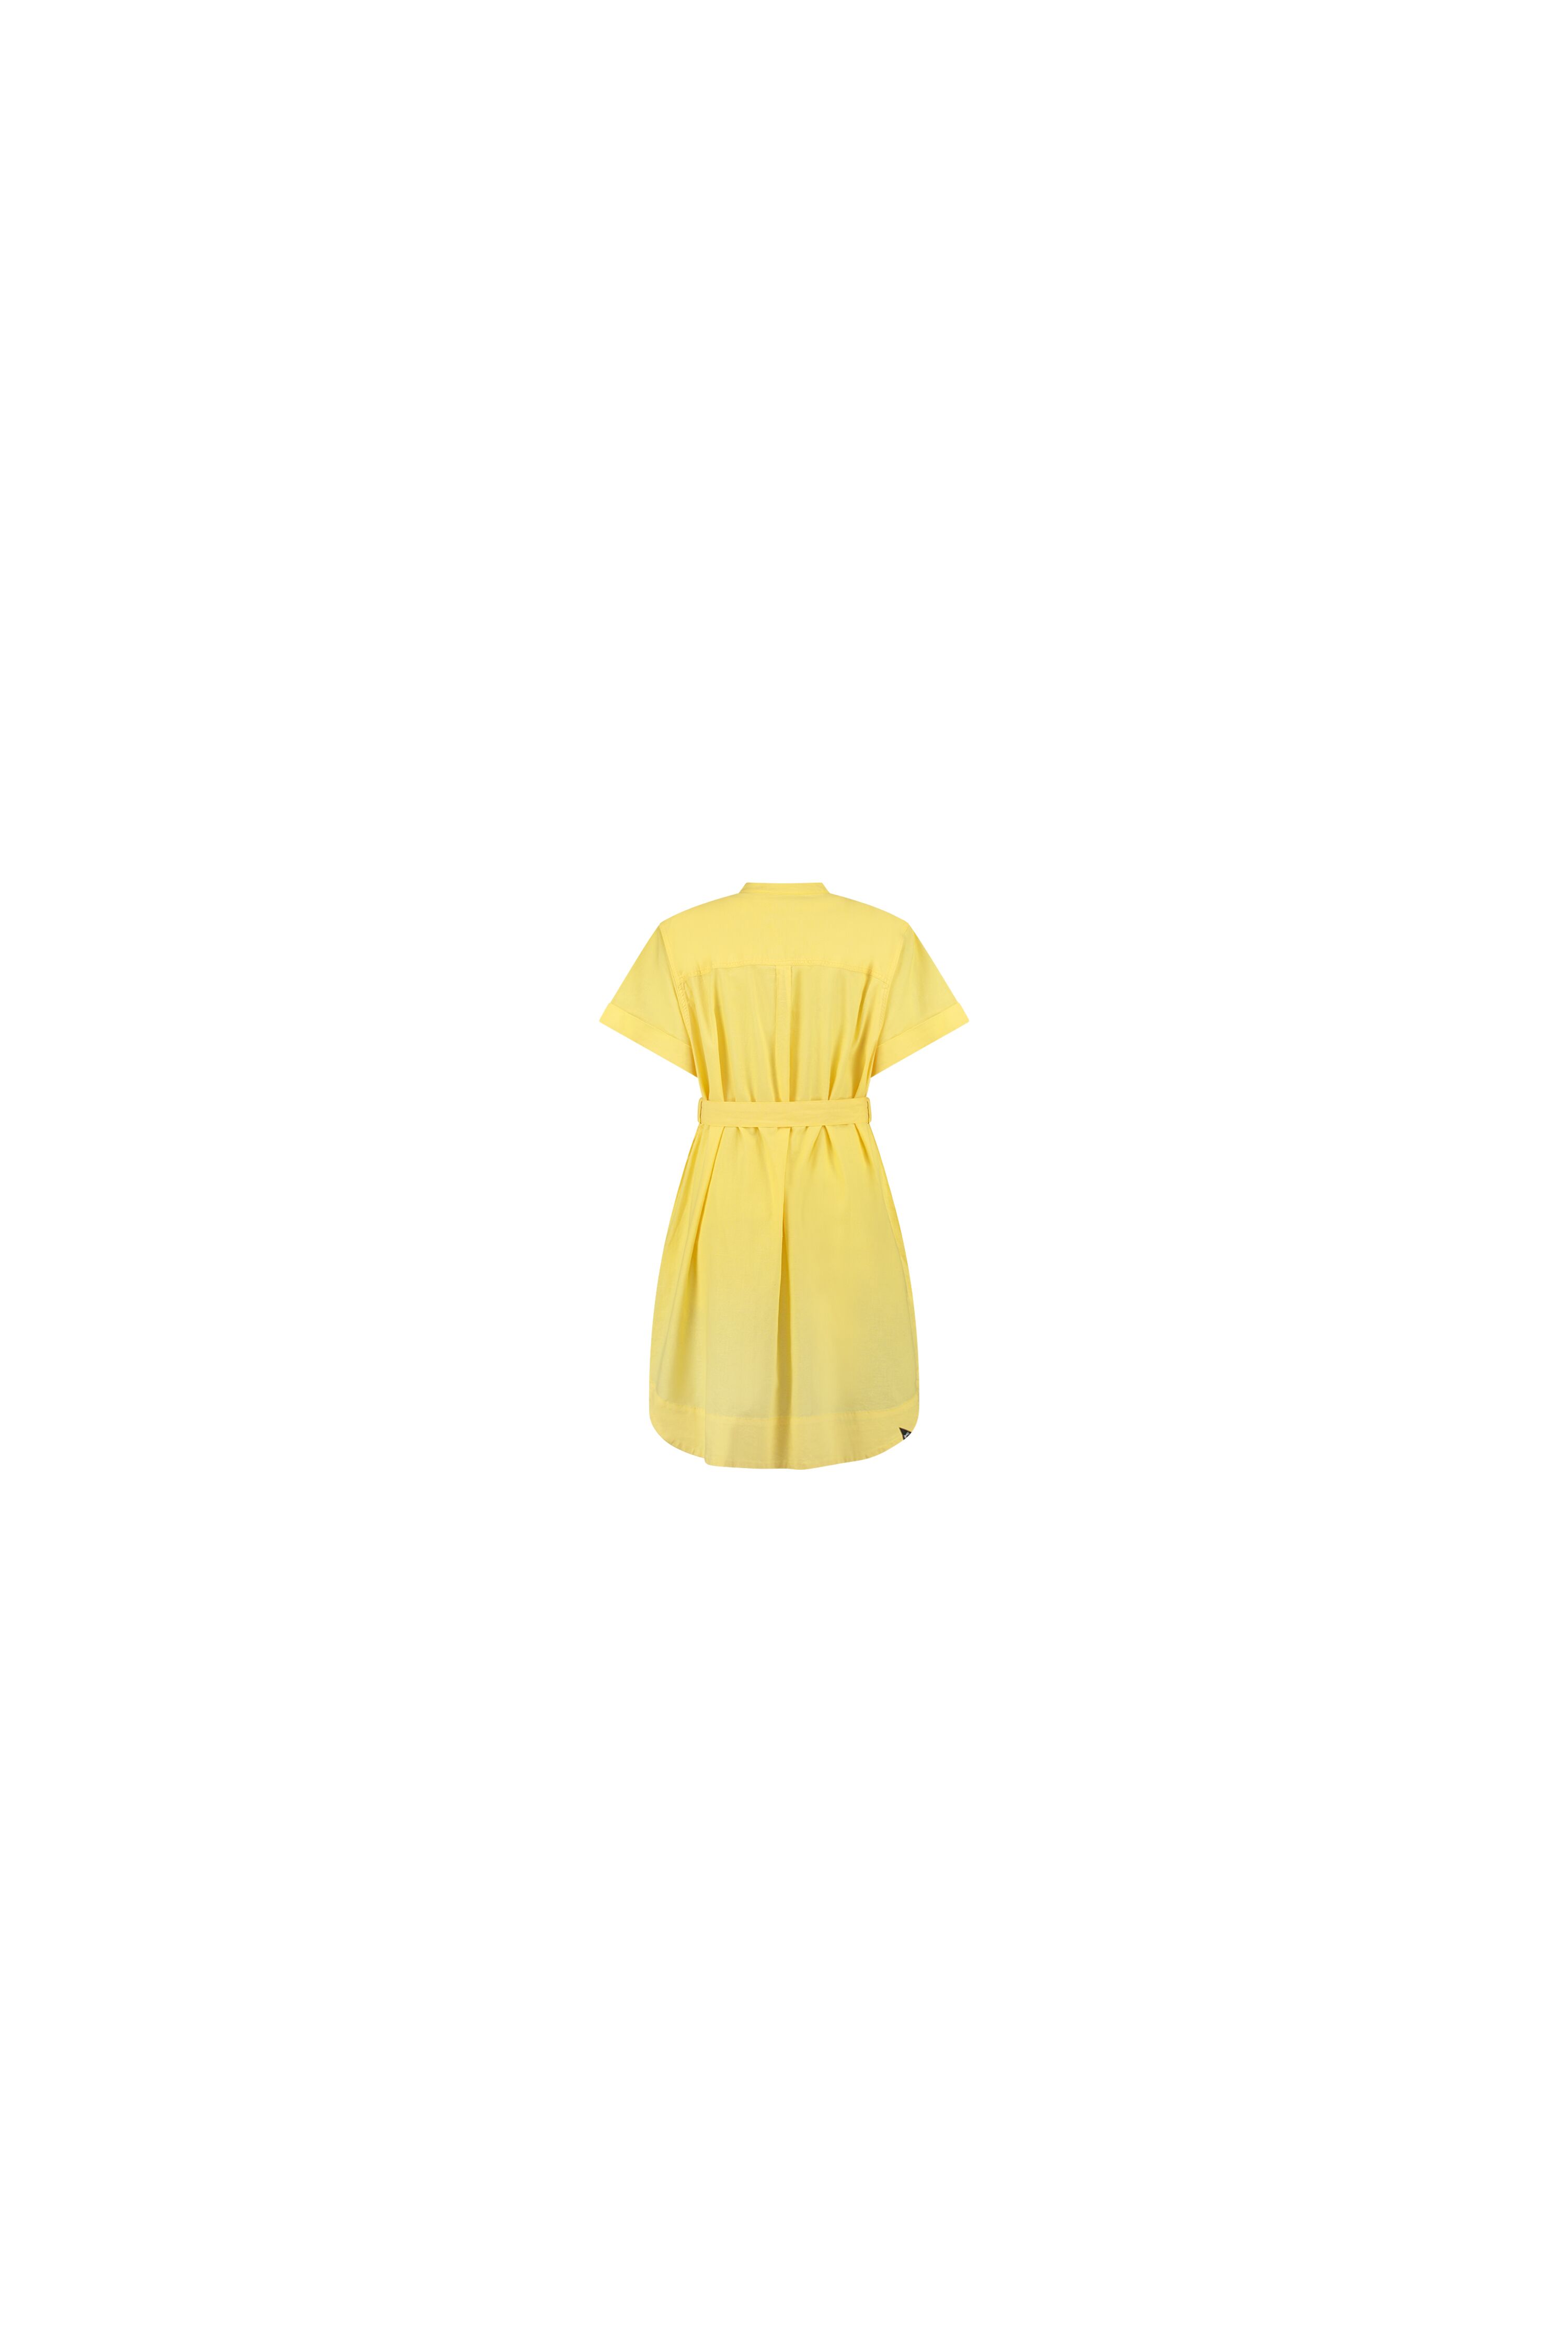 Denham Alice Dress CL Solar Power Yellow 02-23-04-15-030 | Bloom Fashion